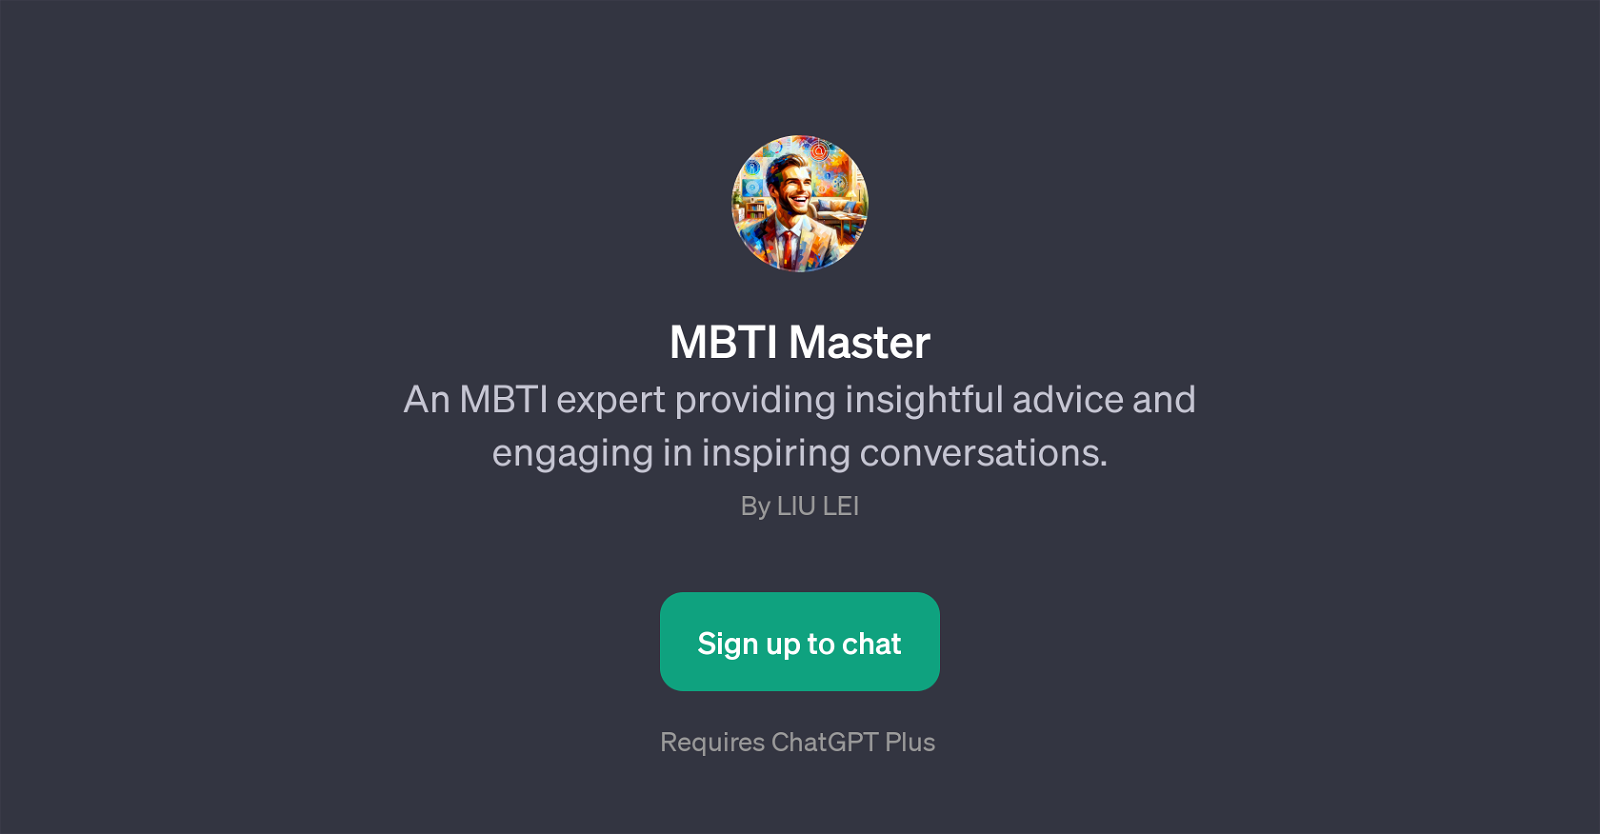 MBTI Master website